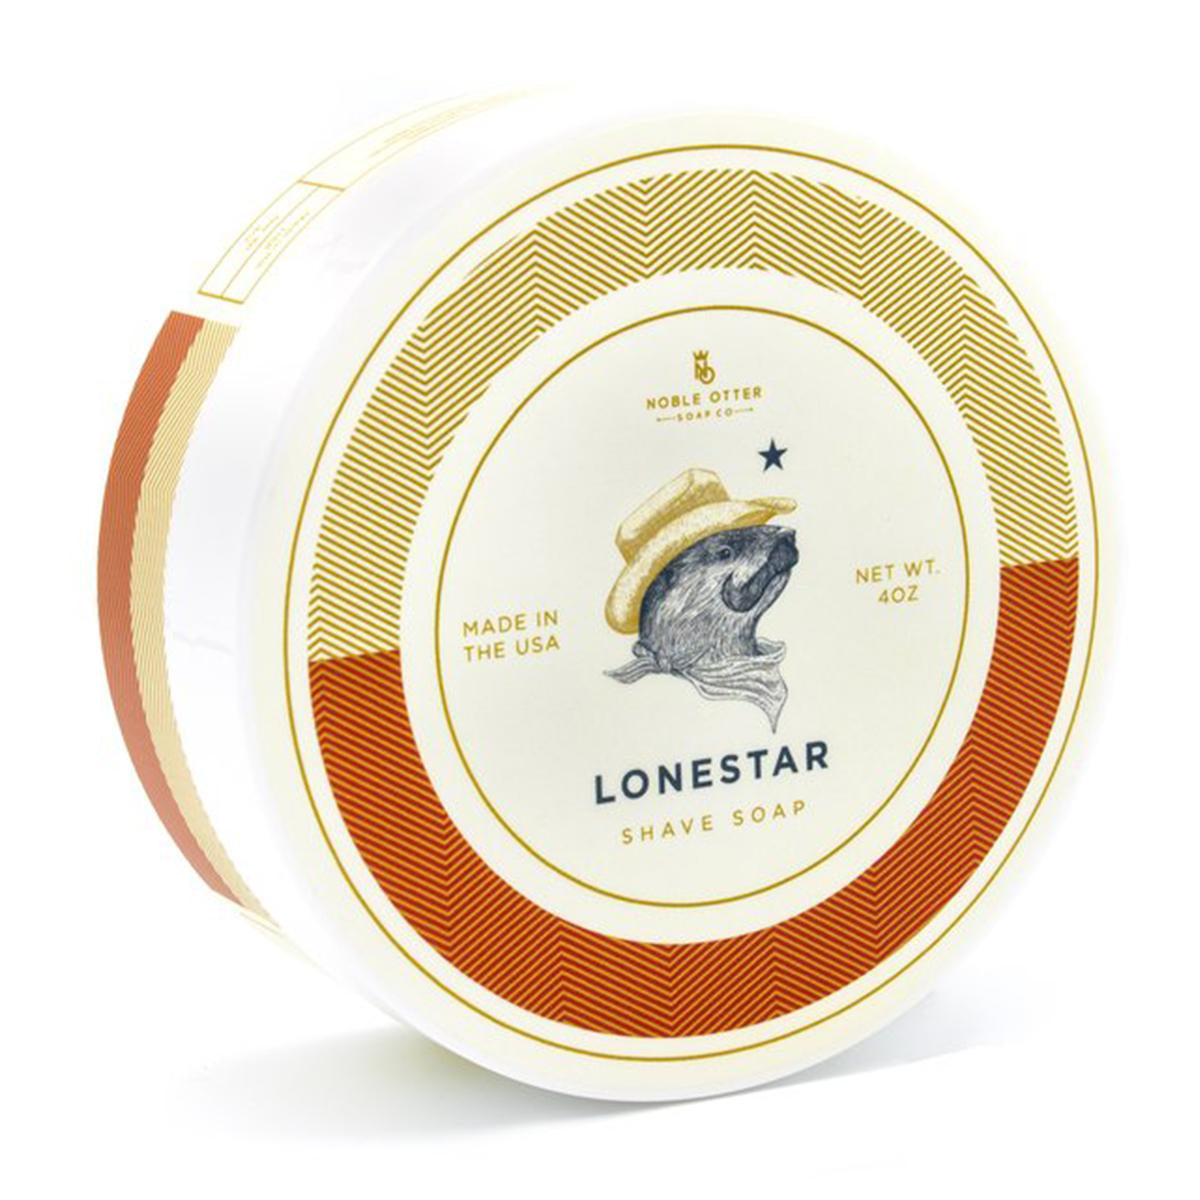 Primary image of Lonestar Shaving Soap